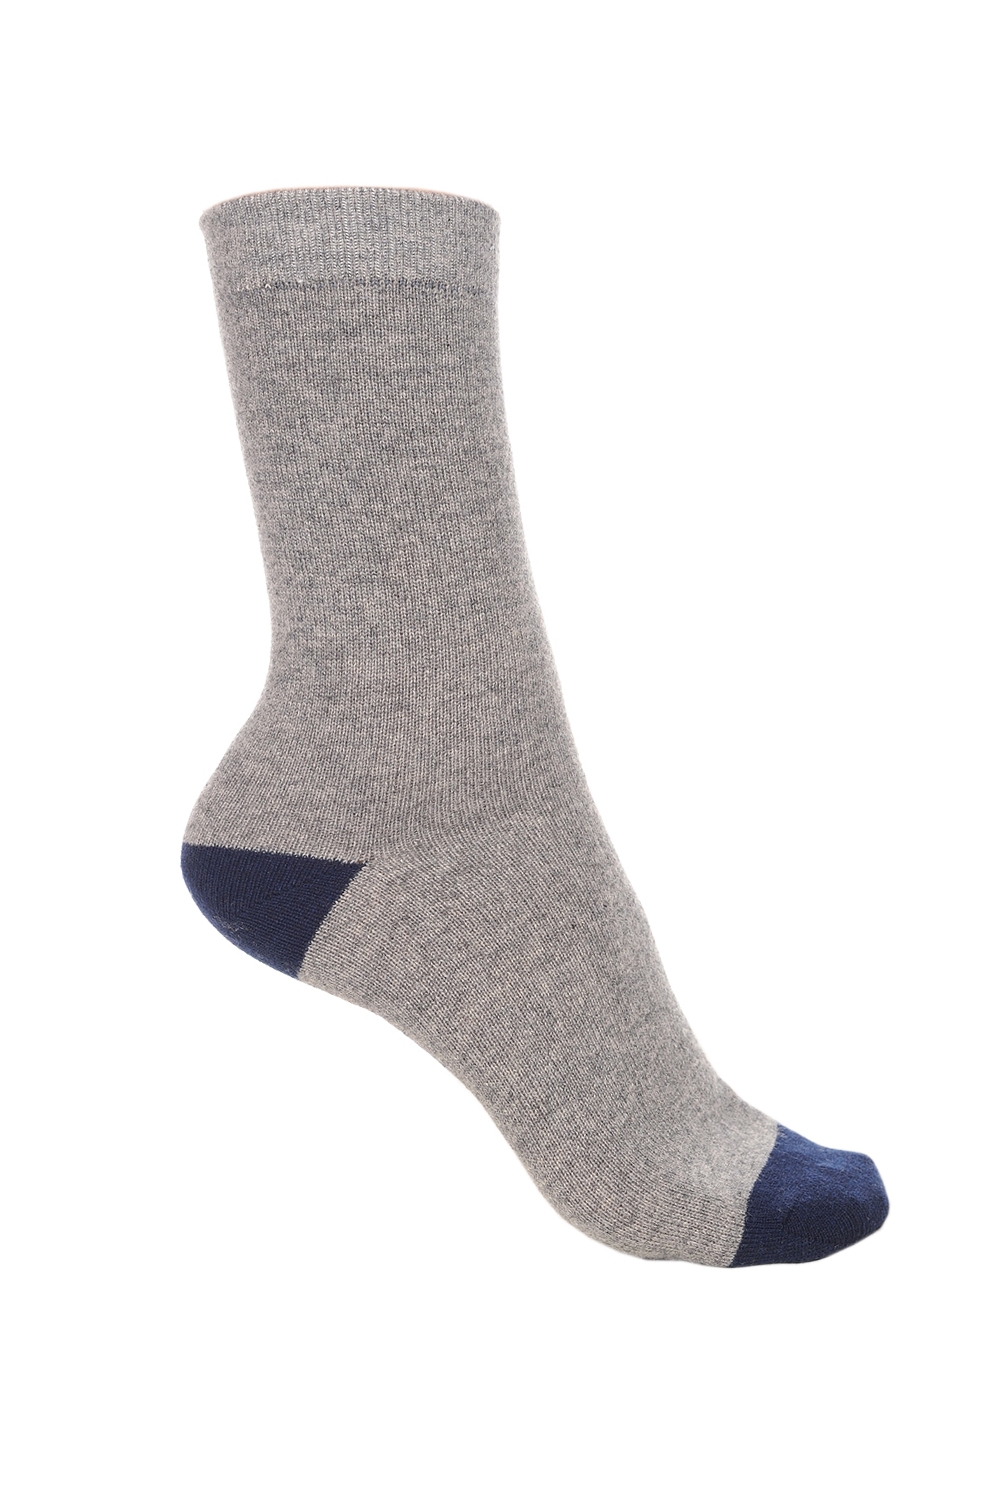 Cashmere & Elastane accessories socks frontibus grey marl dress blue 5 5 8 39 42 